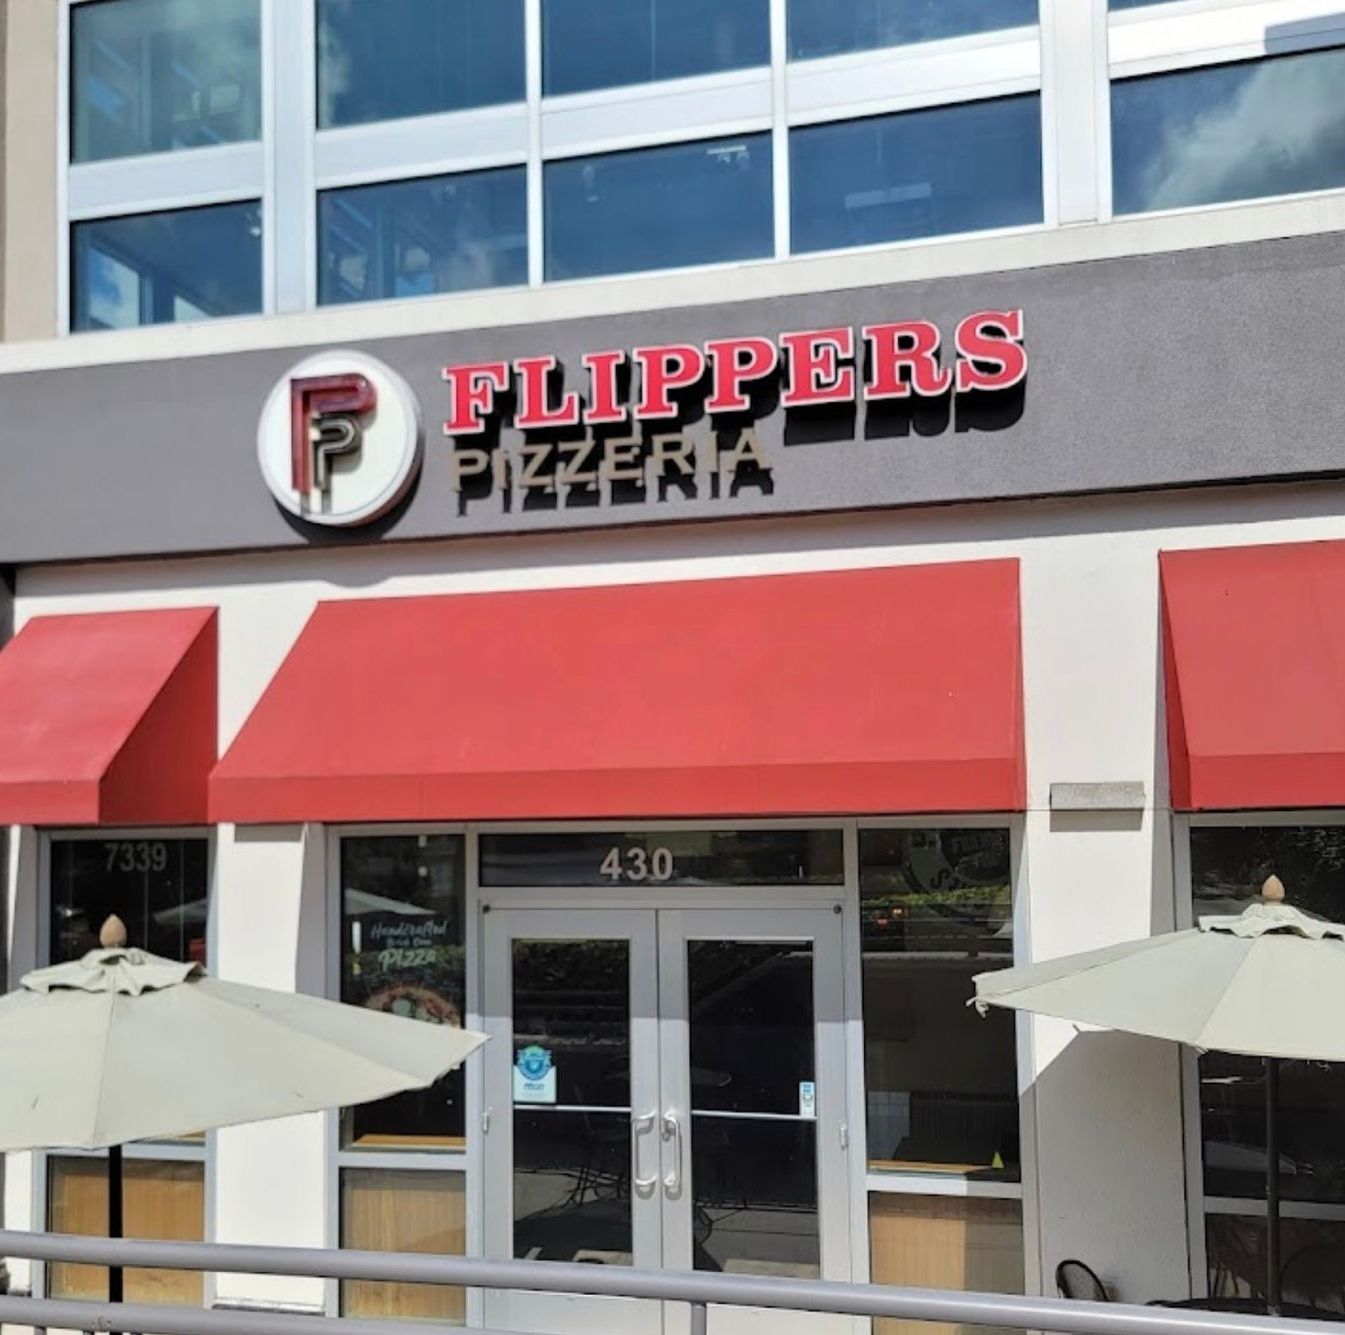 Best Pizza Dr. Phillips Southwest Orlando FL